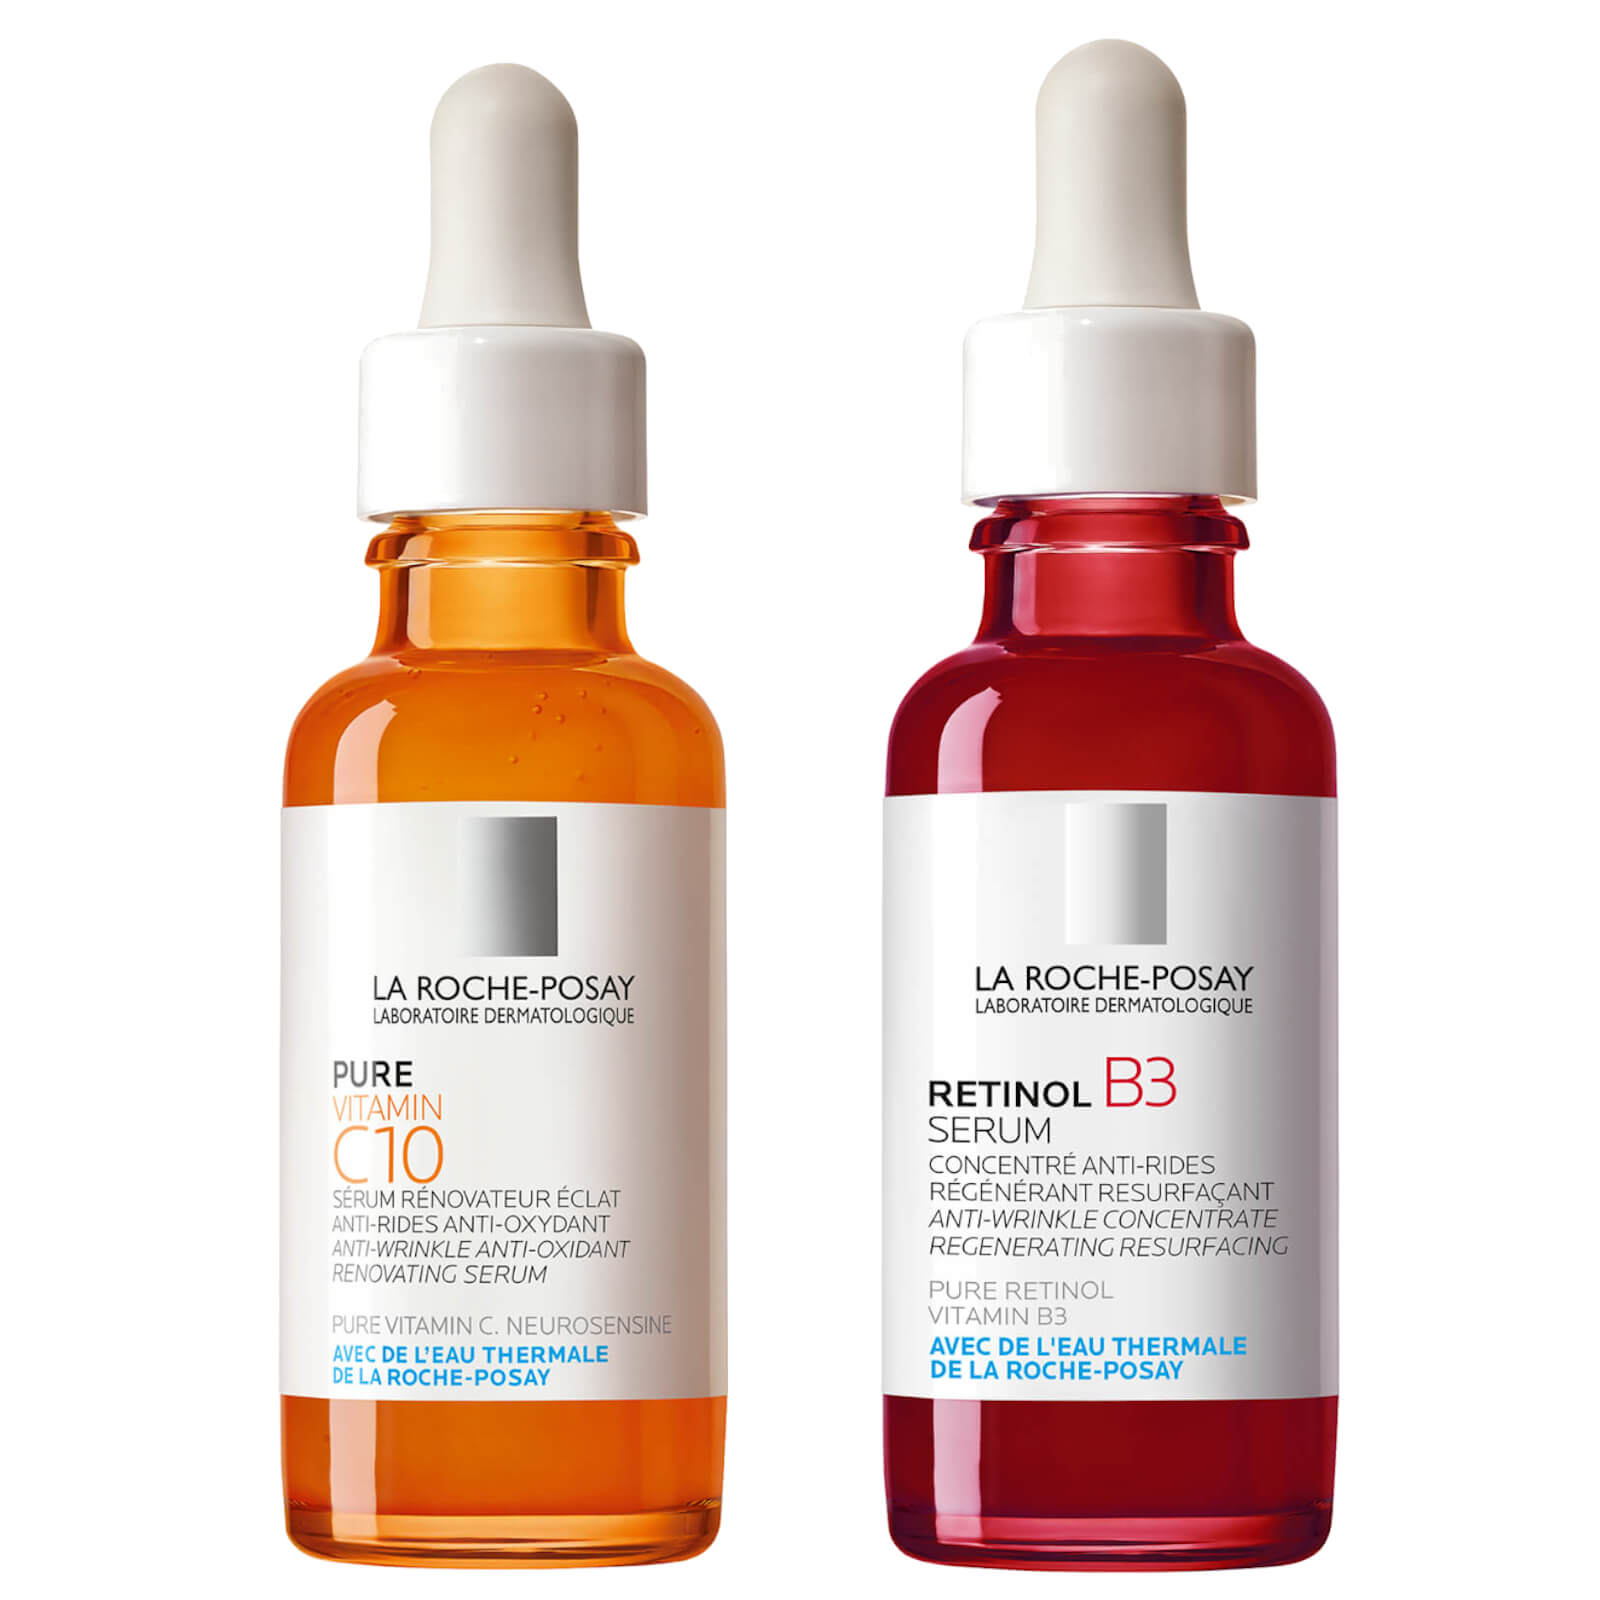 Image of La Roche-Posay Retinol and Vitamin C Serum Duo